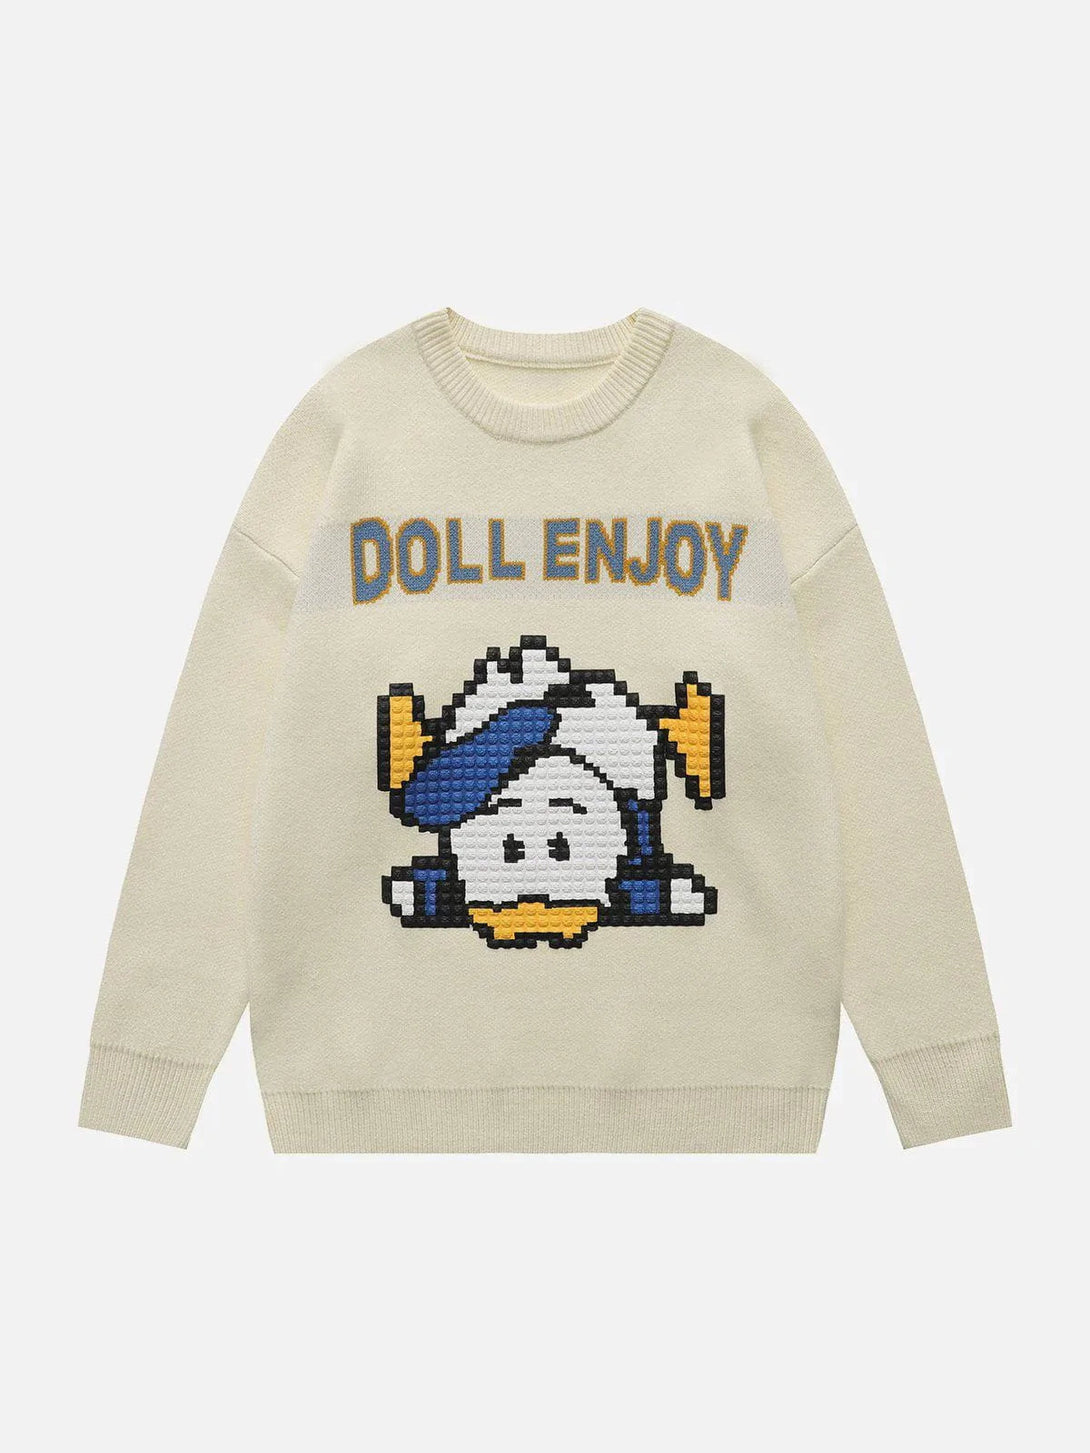 Majesda® - Pixelated Duck Print Sweater outfit ideas streetwear fashion